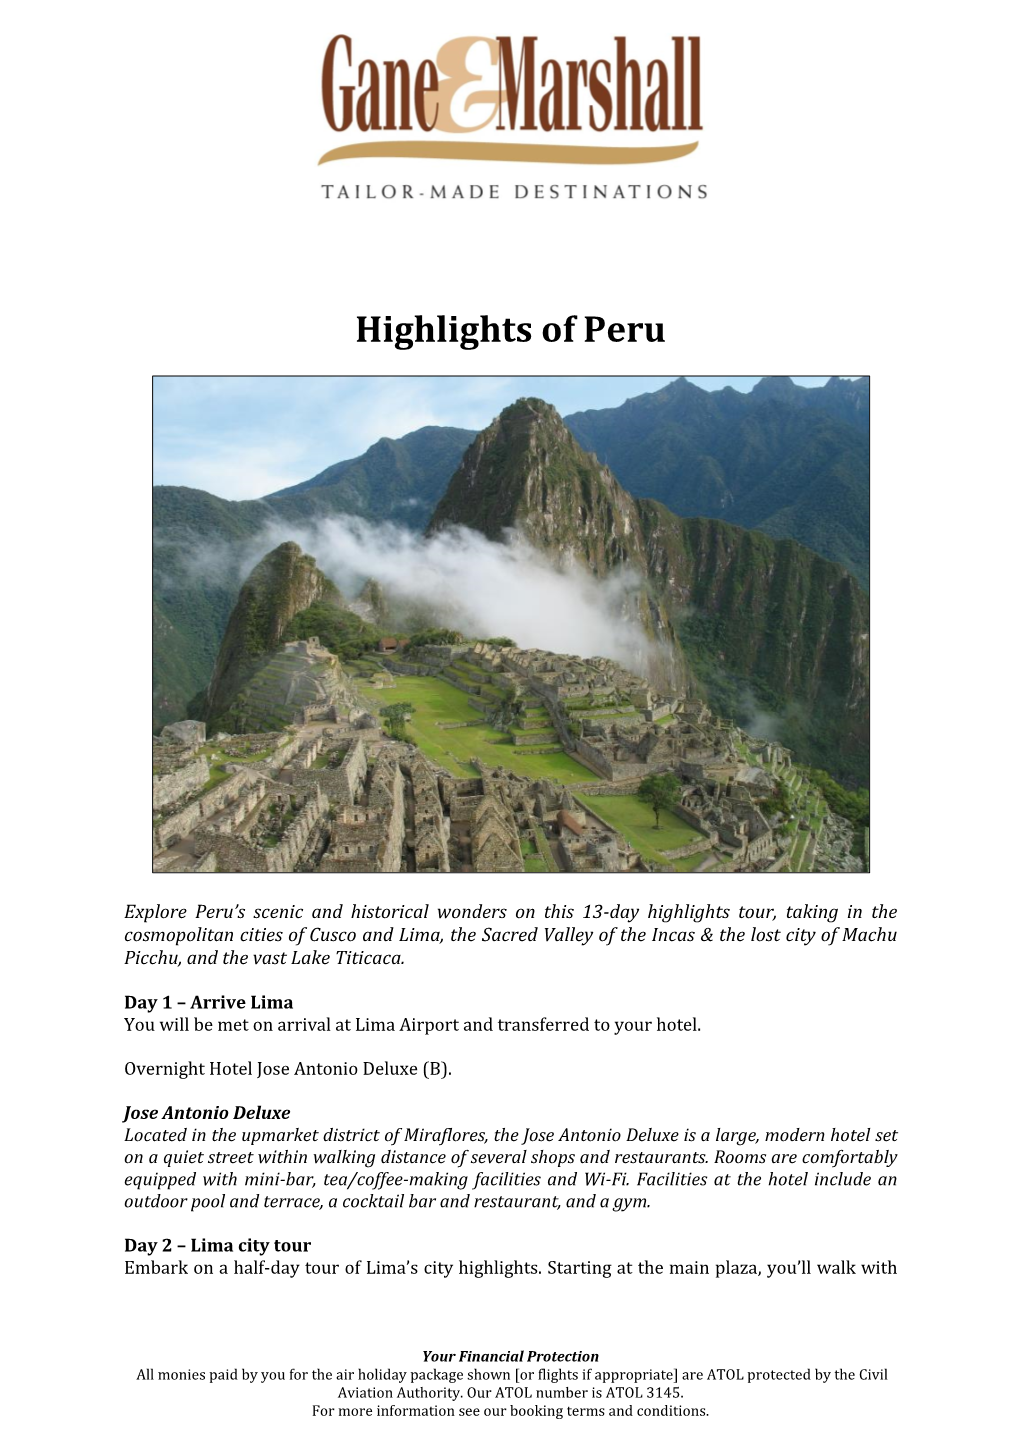 Highlights of Peru Itinerary